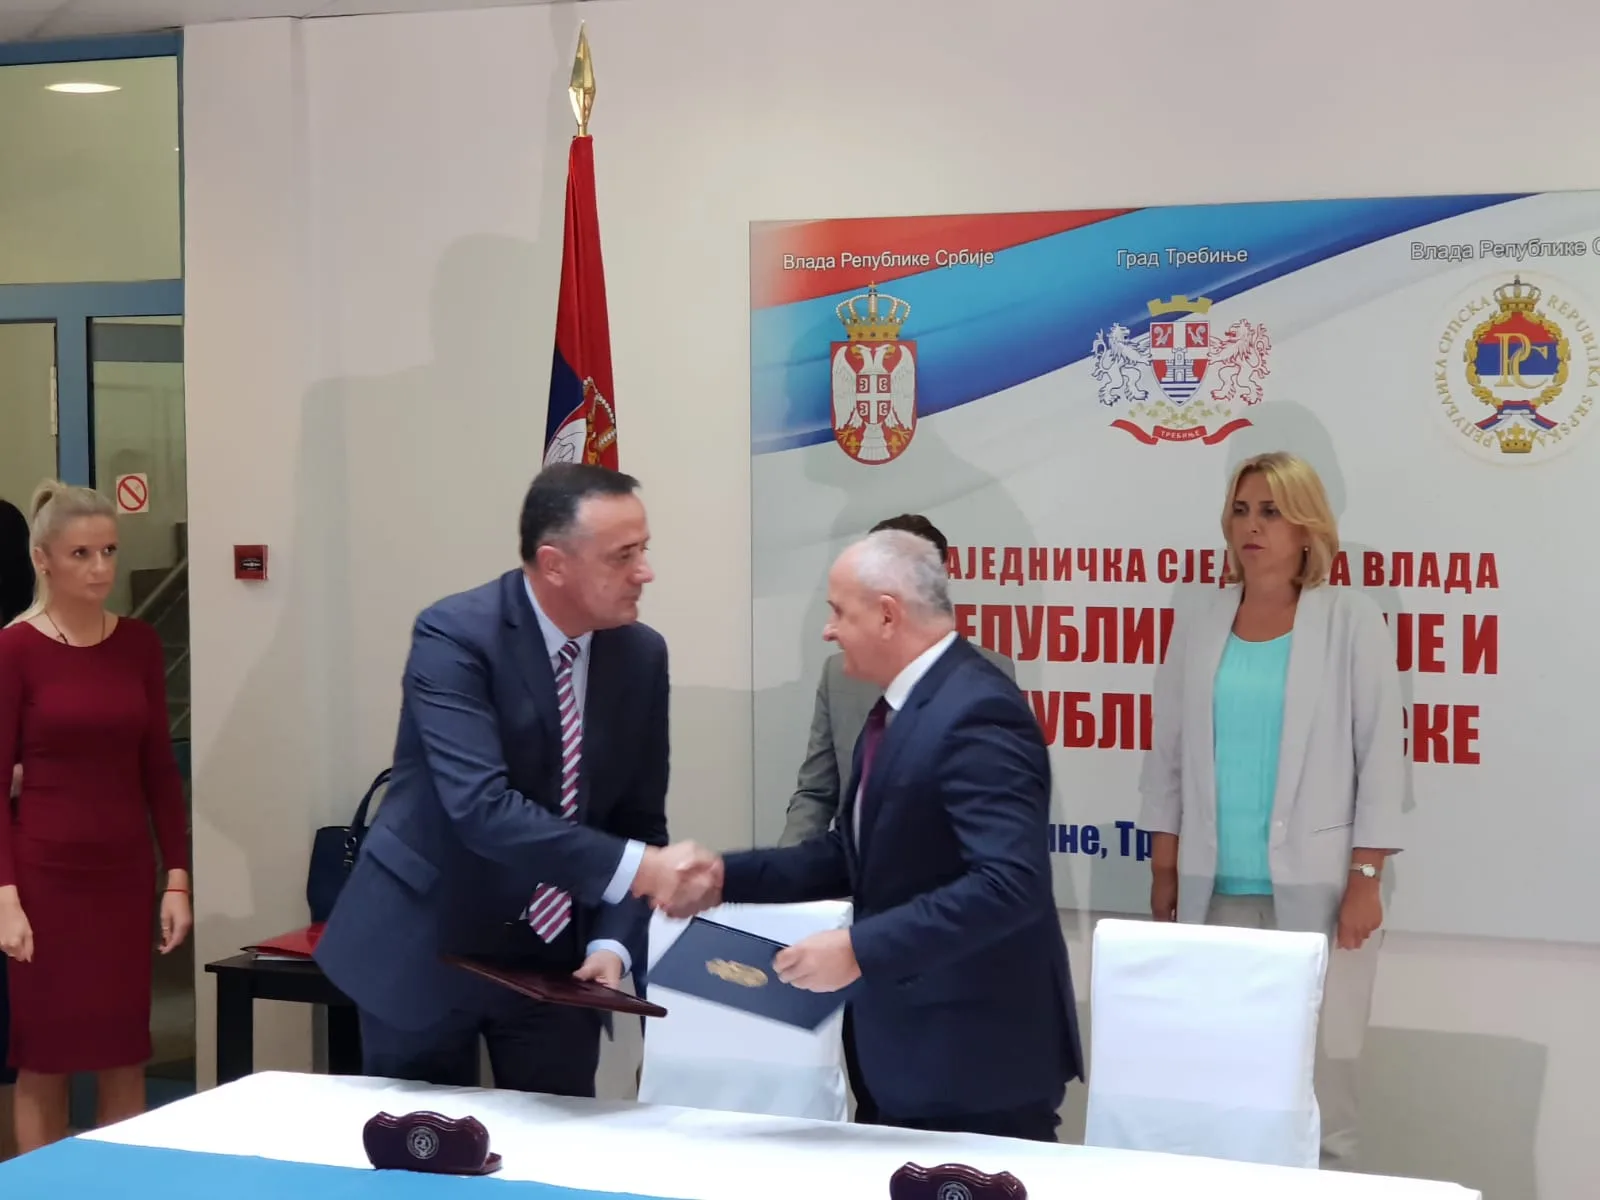 Ministri energetike Republike Srbije i Republike Srpske – Aleksandar Antić i Petar Đokić